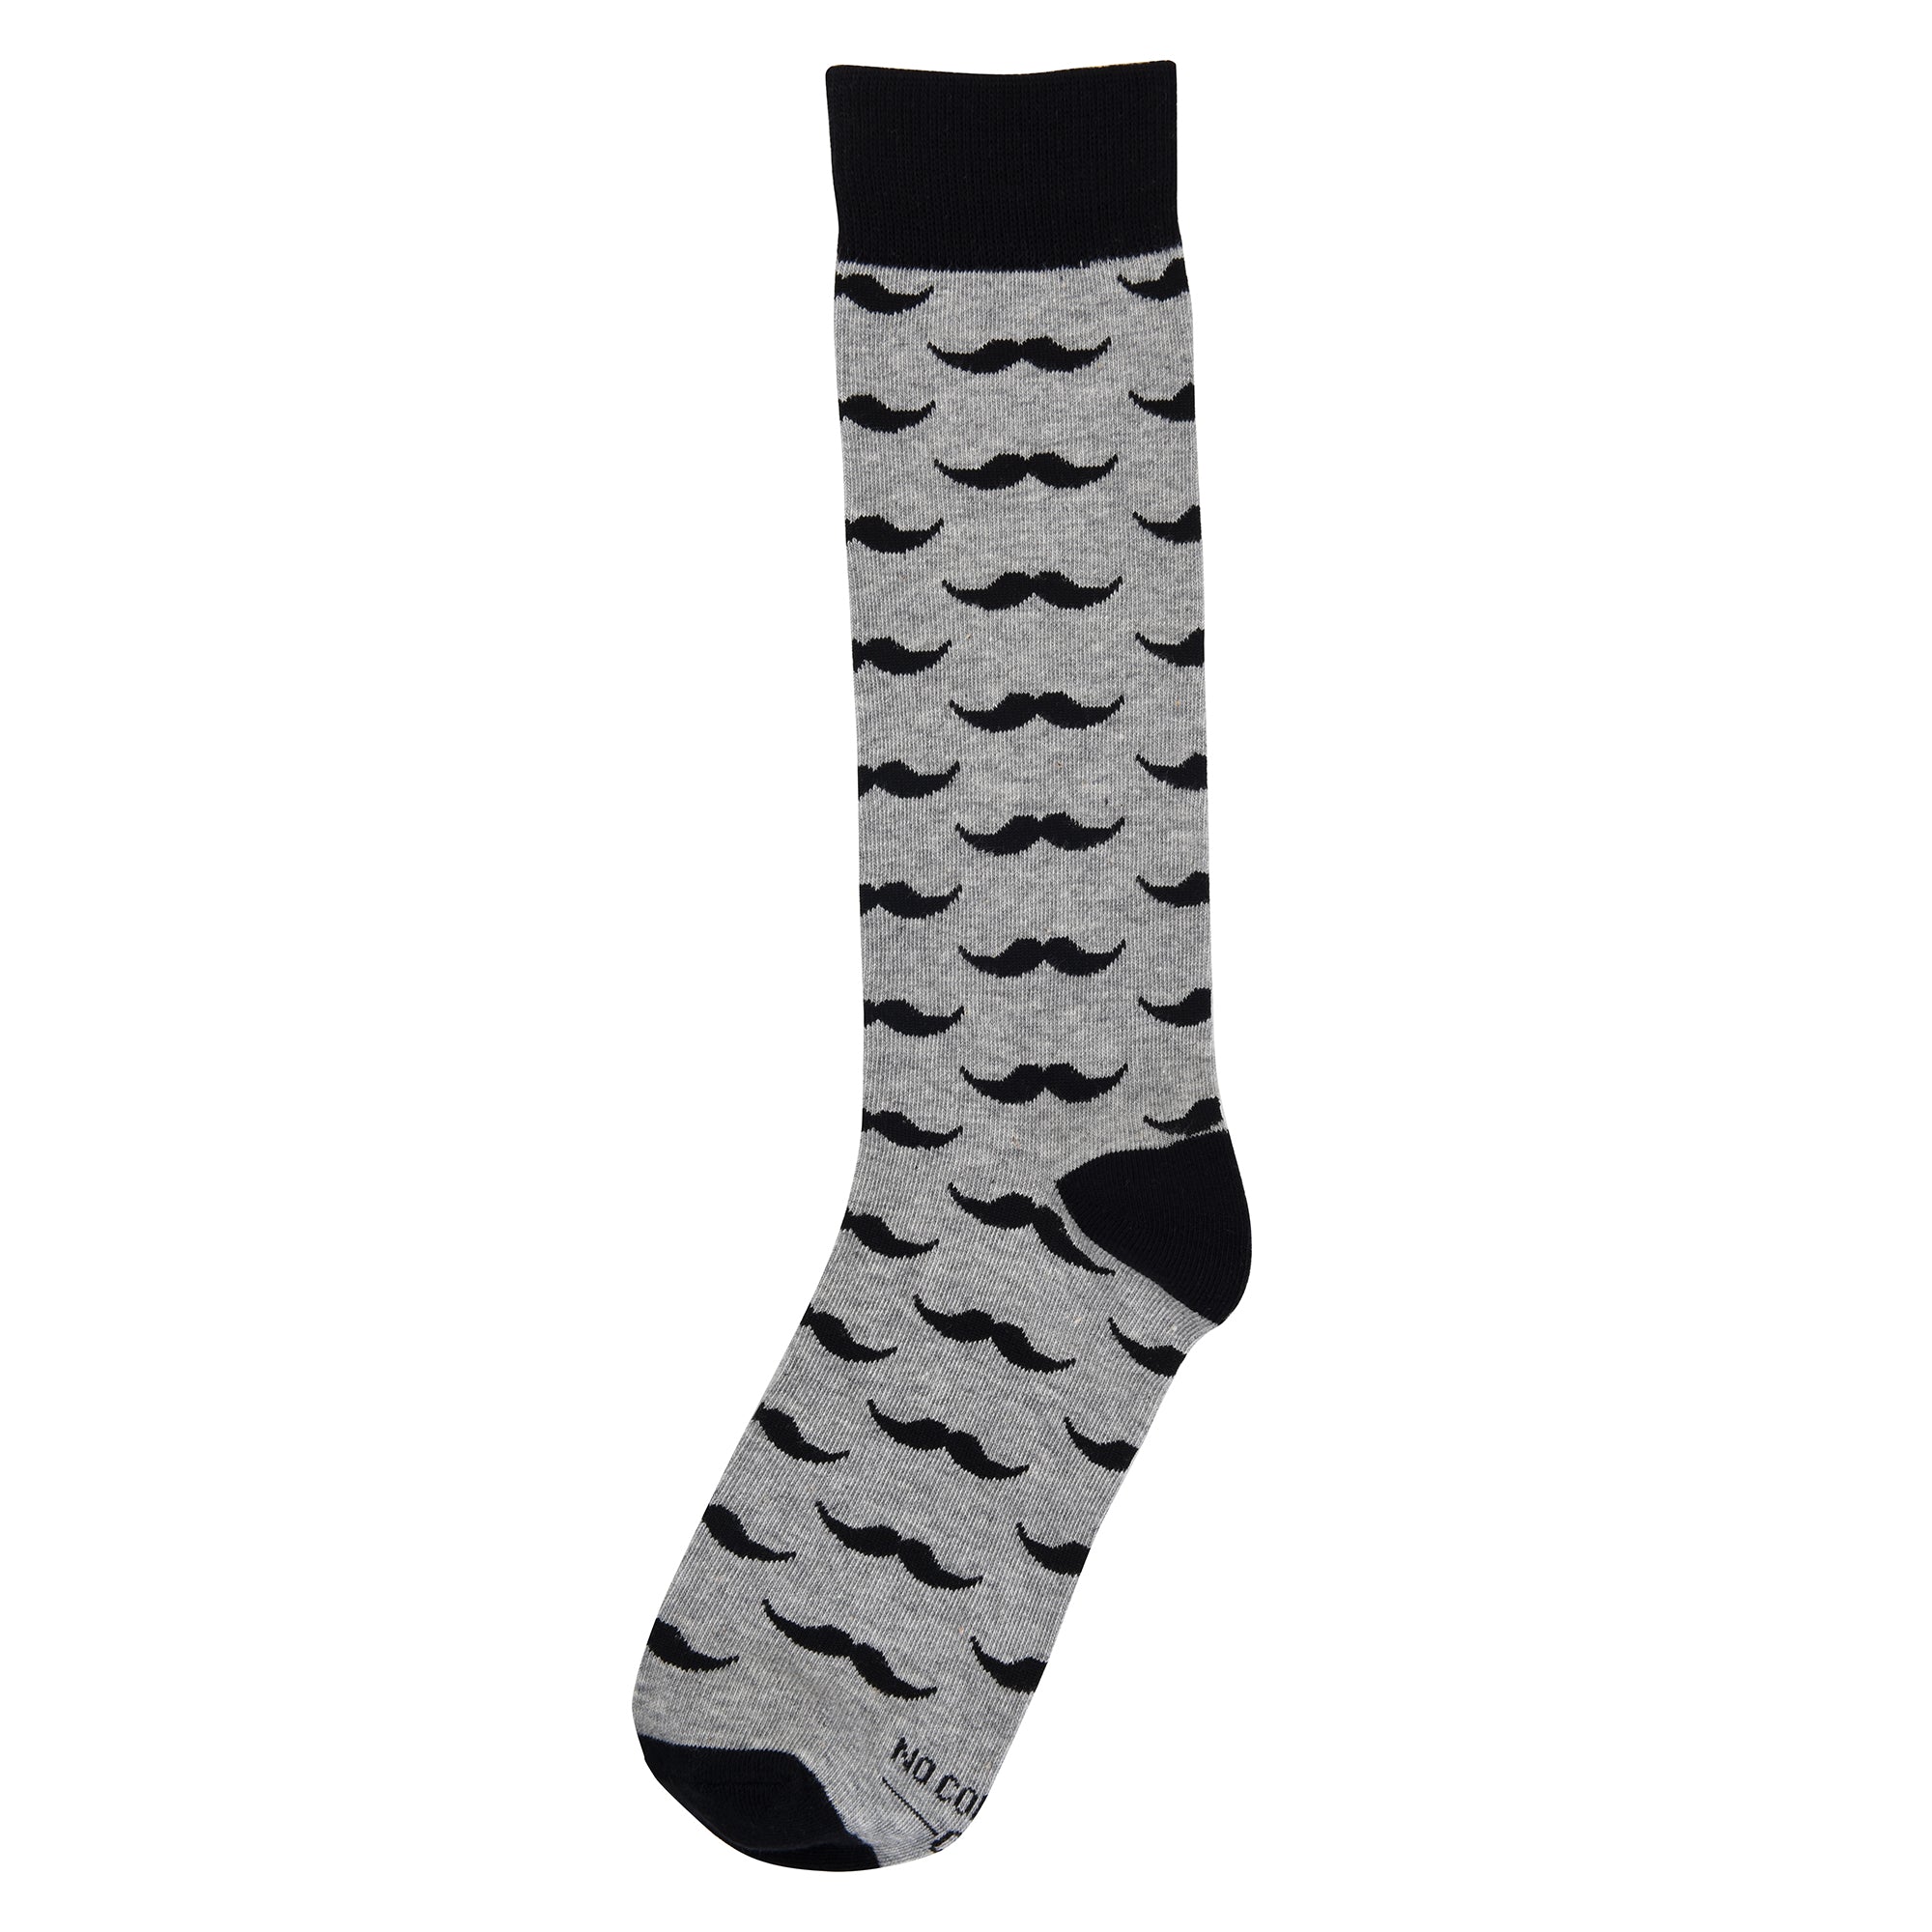 Grey with Black Mustache Socks